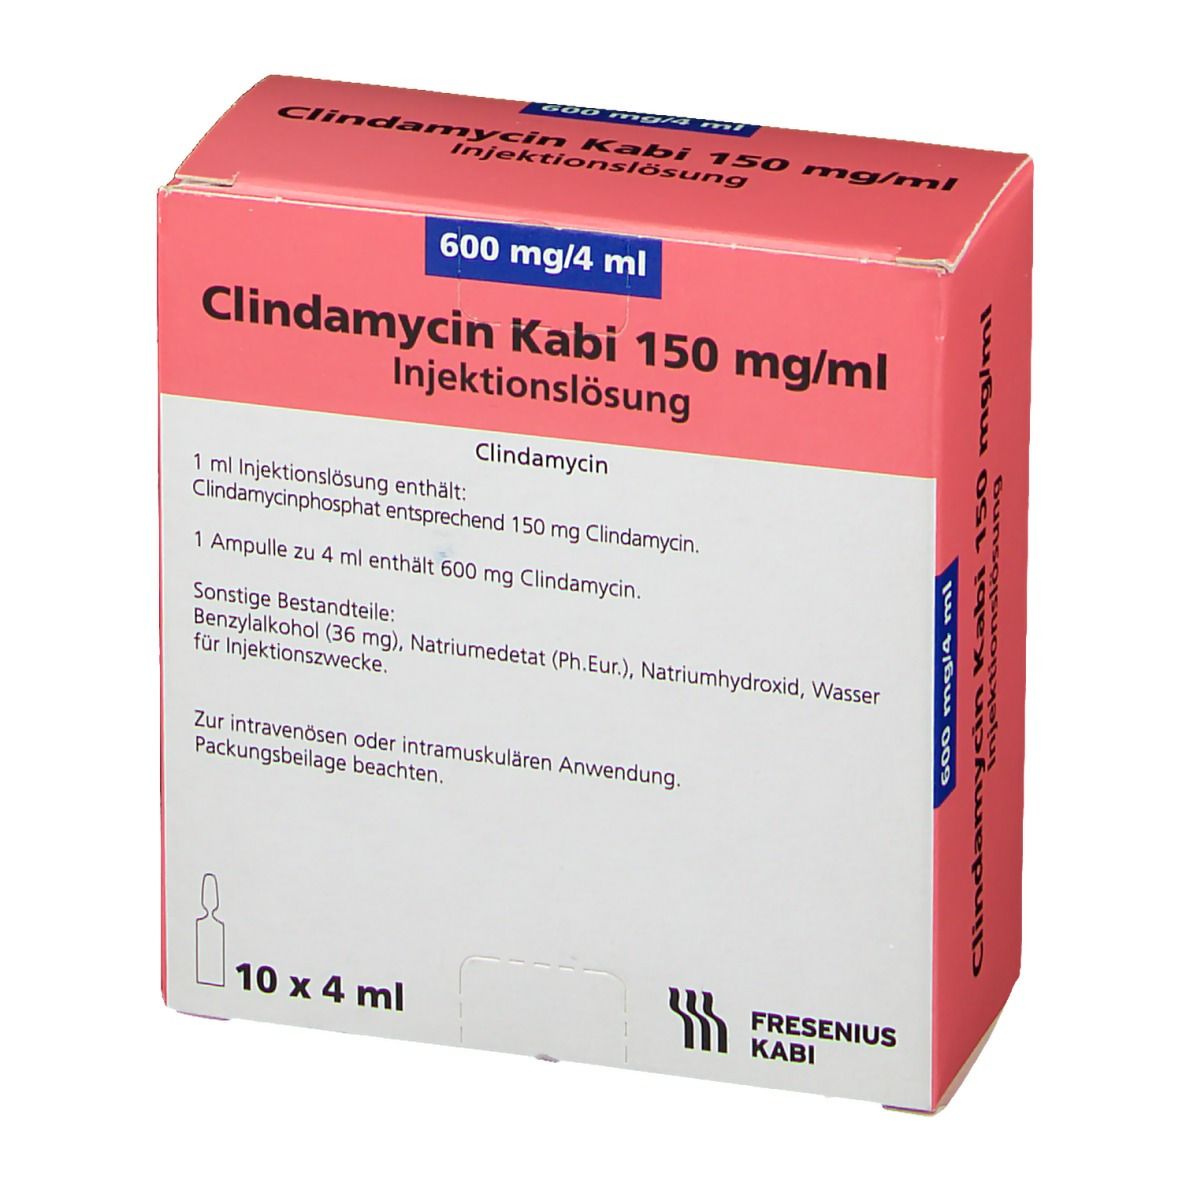 Clindamycin Kabi 600 mg/4 ml